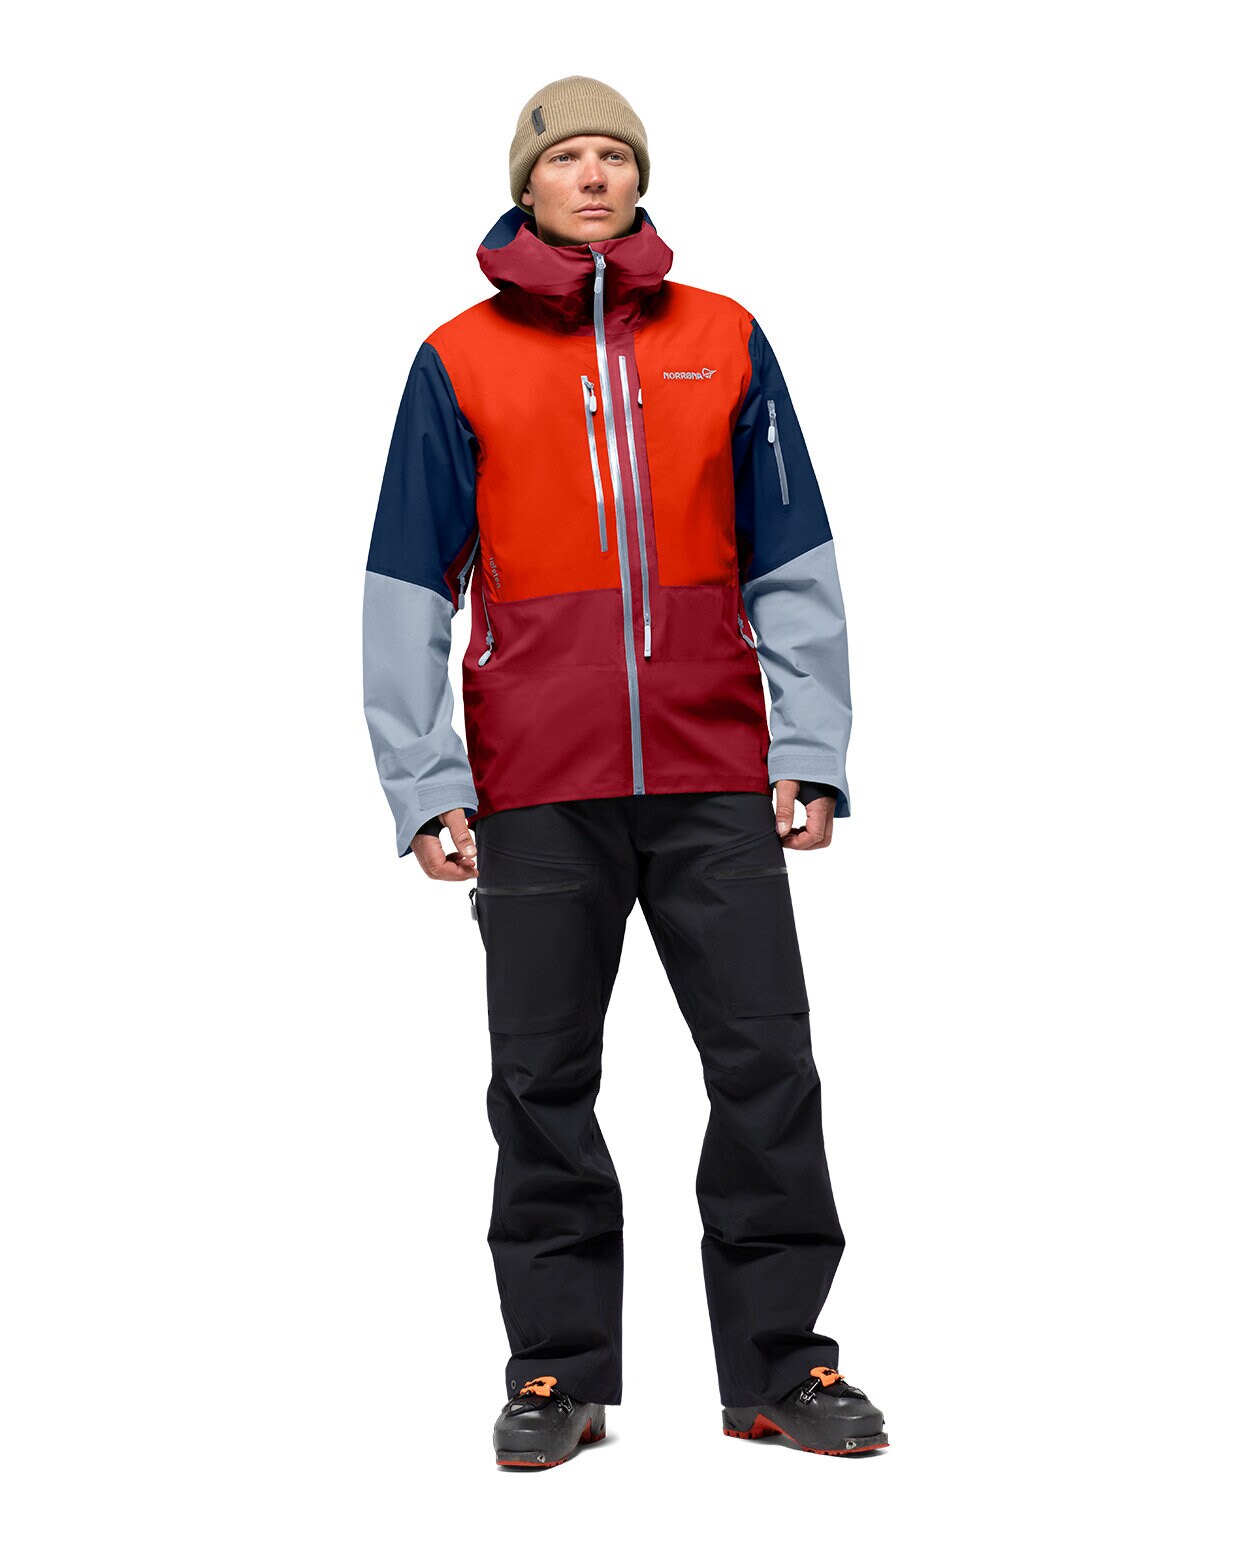 Norröna M Lofoten Gore-Tex Pro Jacket Multi